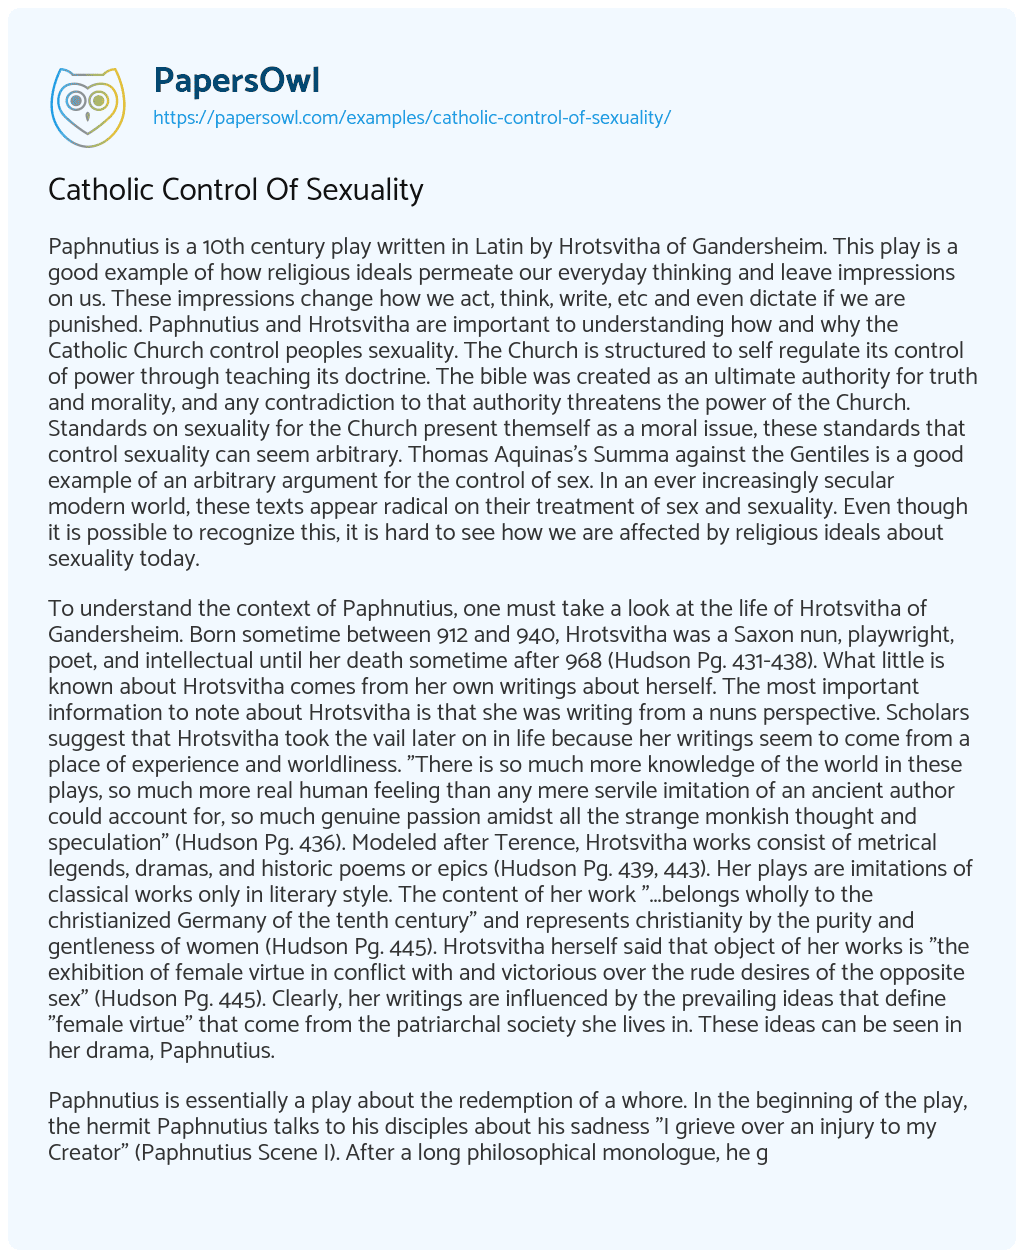 Essay on Catholic Control of Sexuality